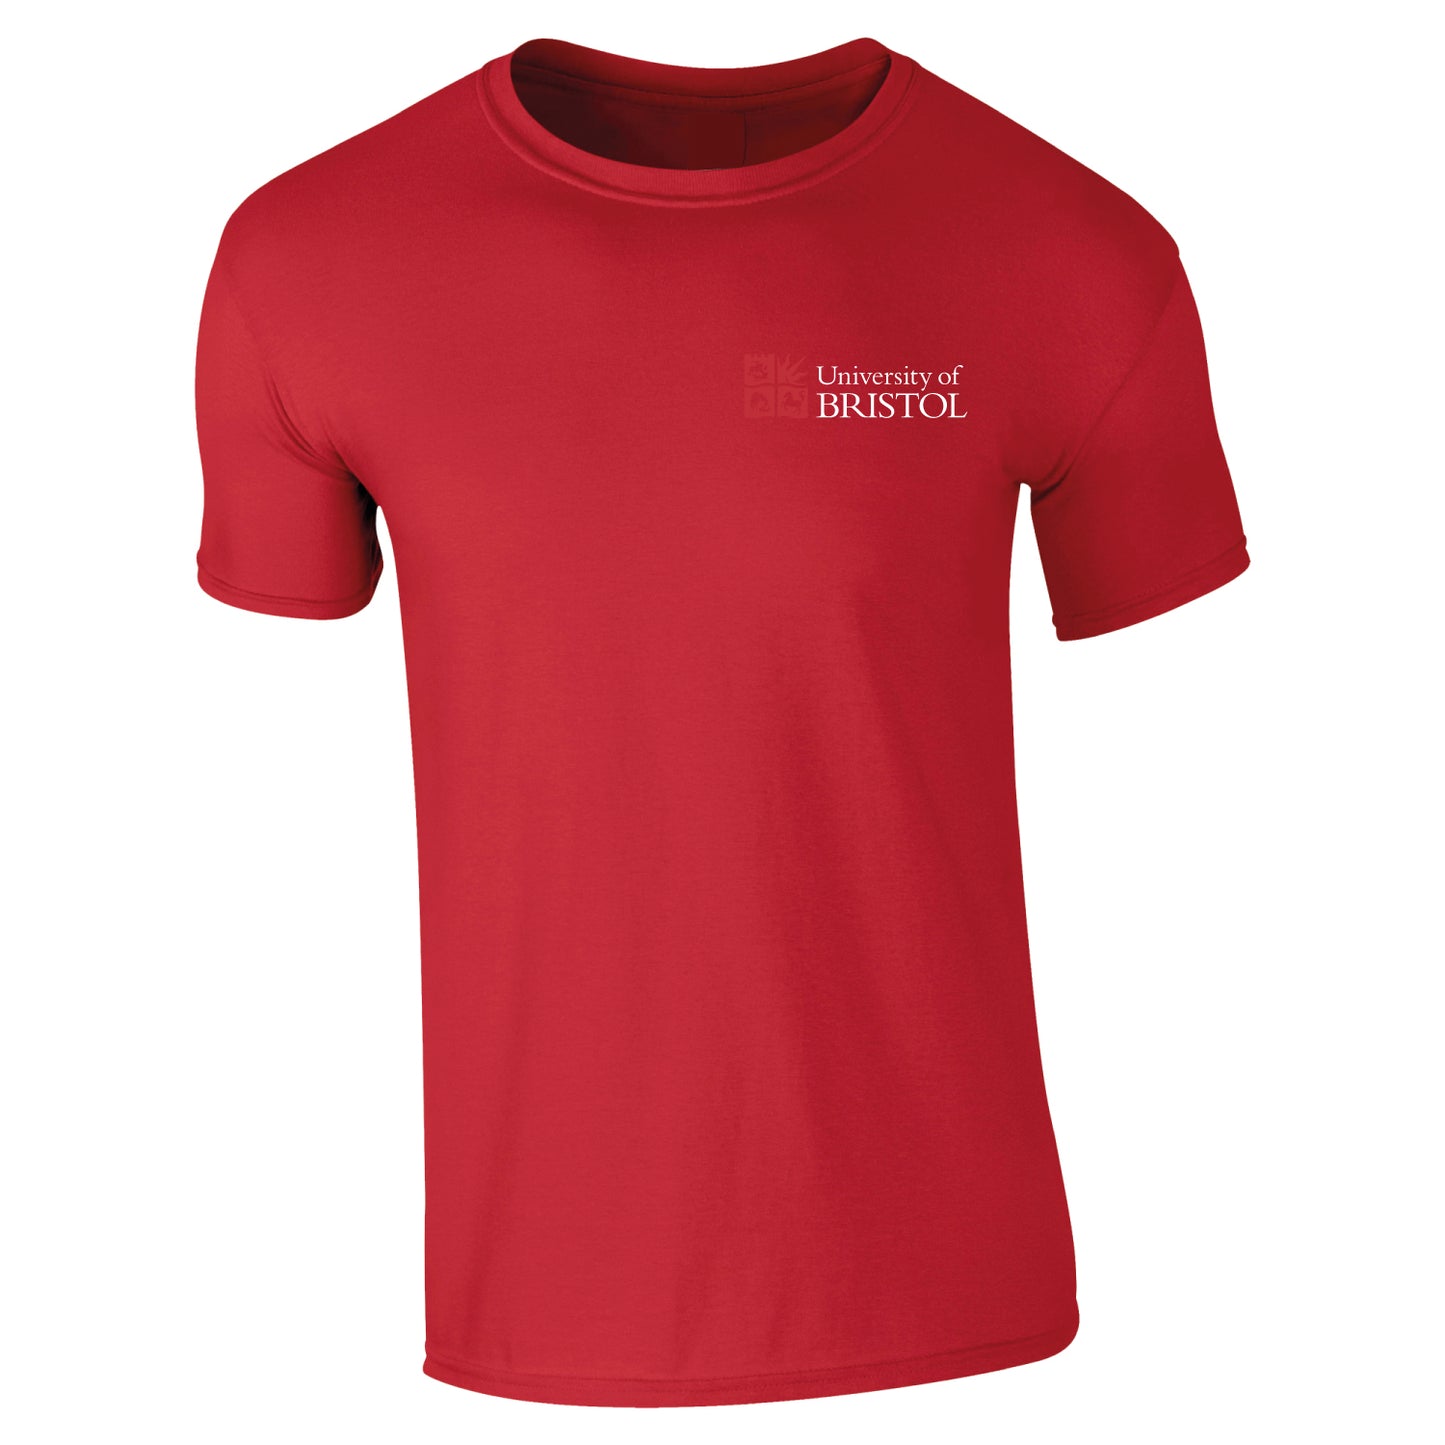 University of Bristol Lifting Club Red T-shirt